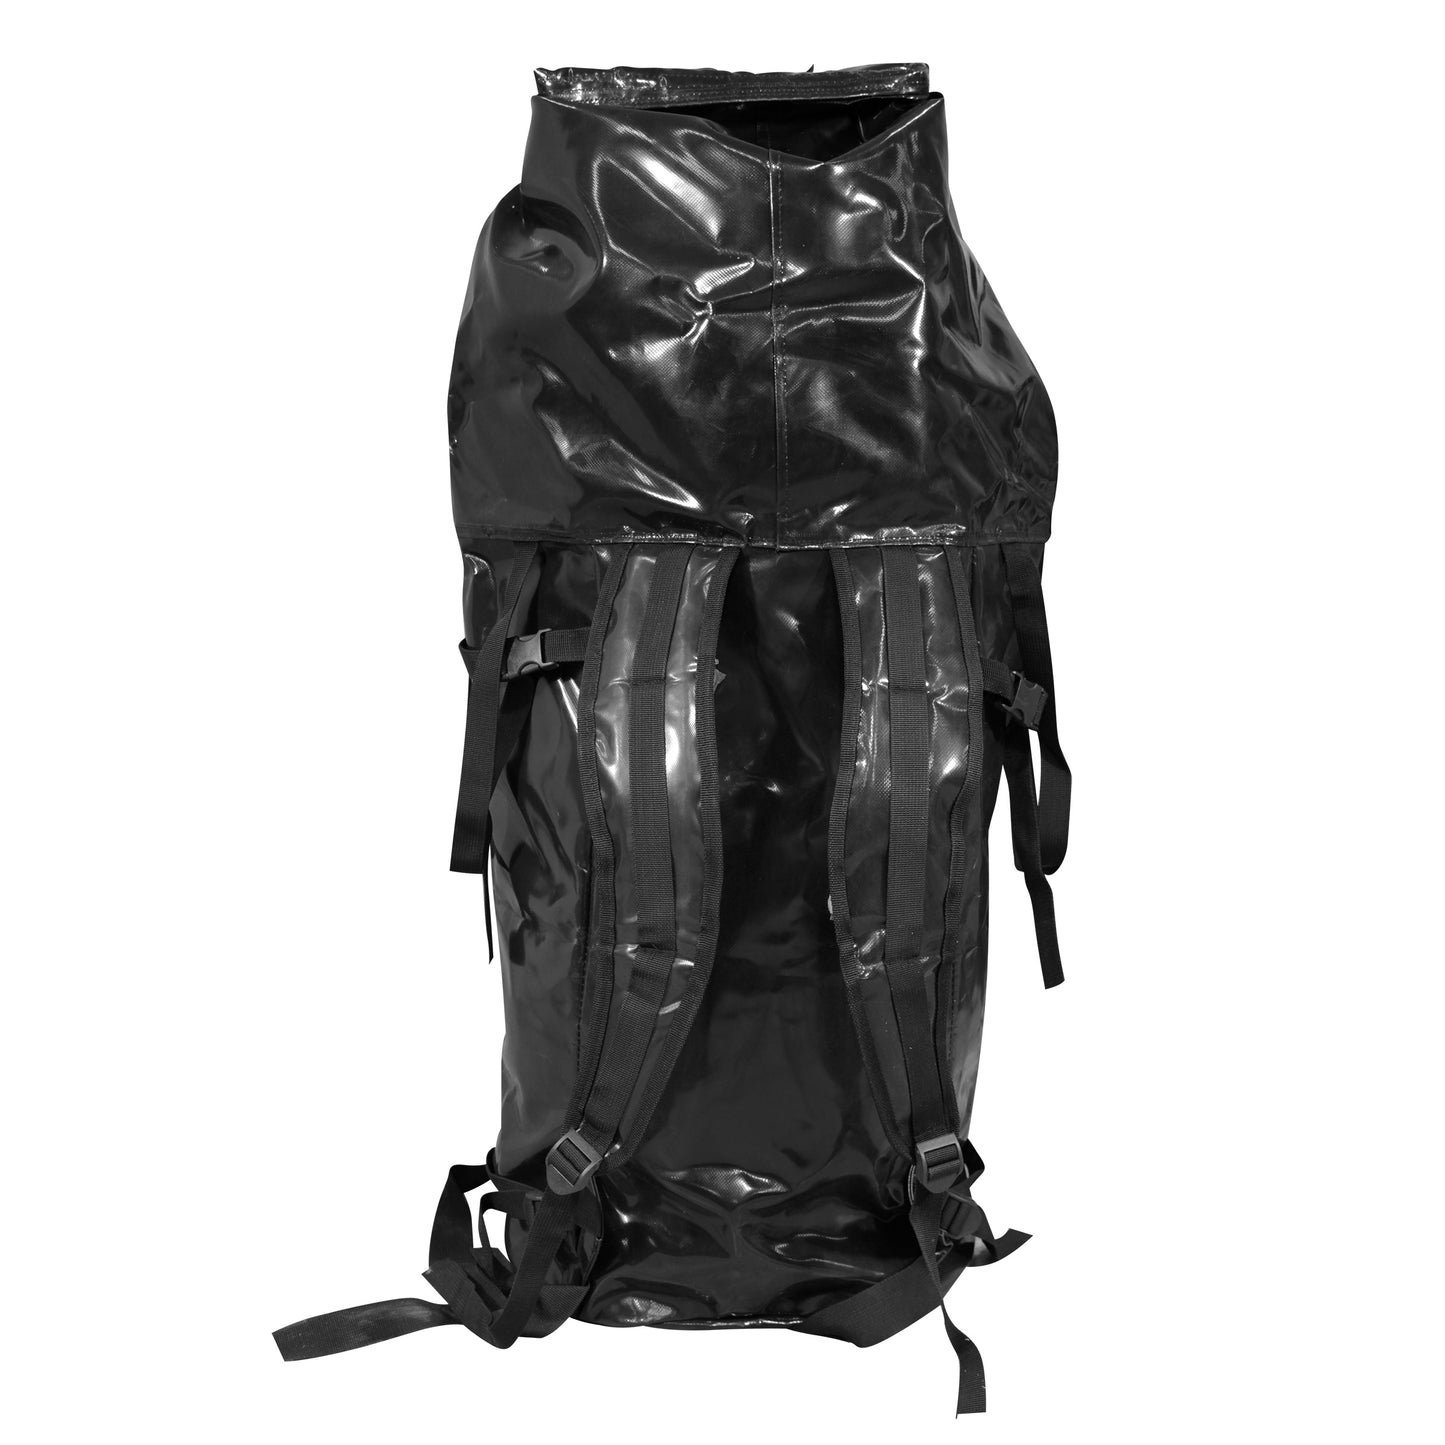 Frivannsliv® Hydrosekk diving bag